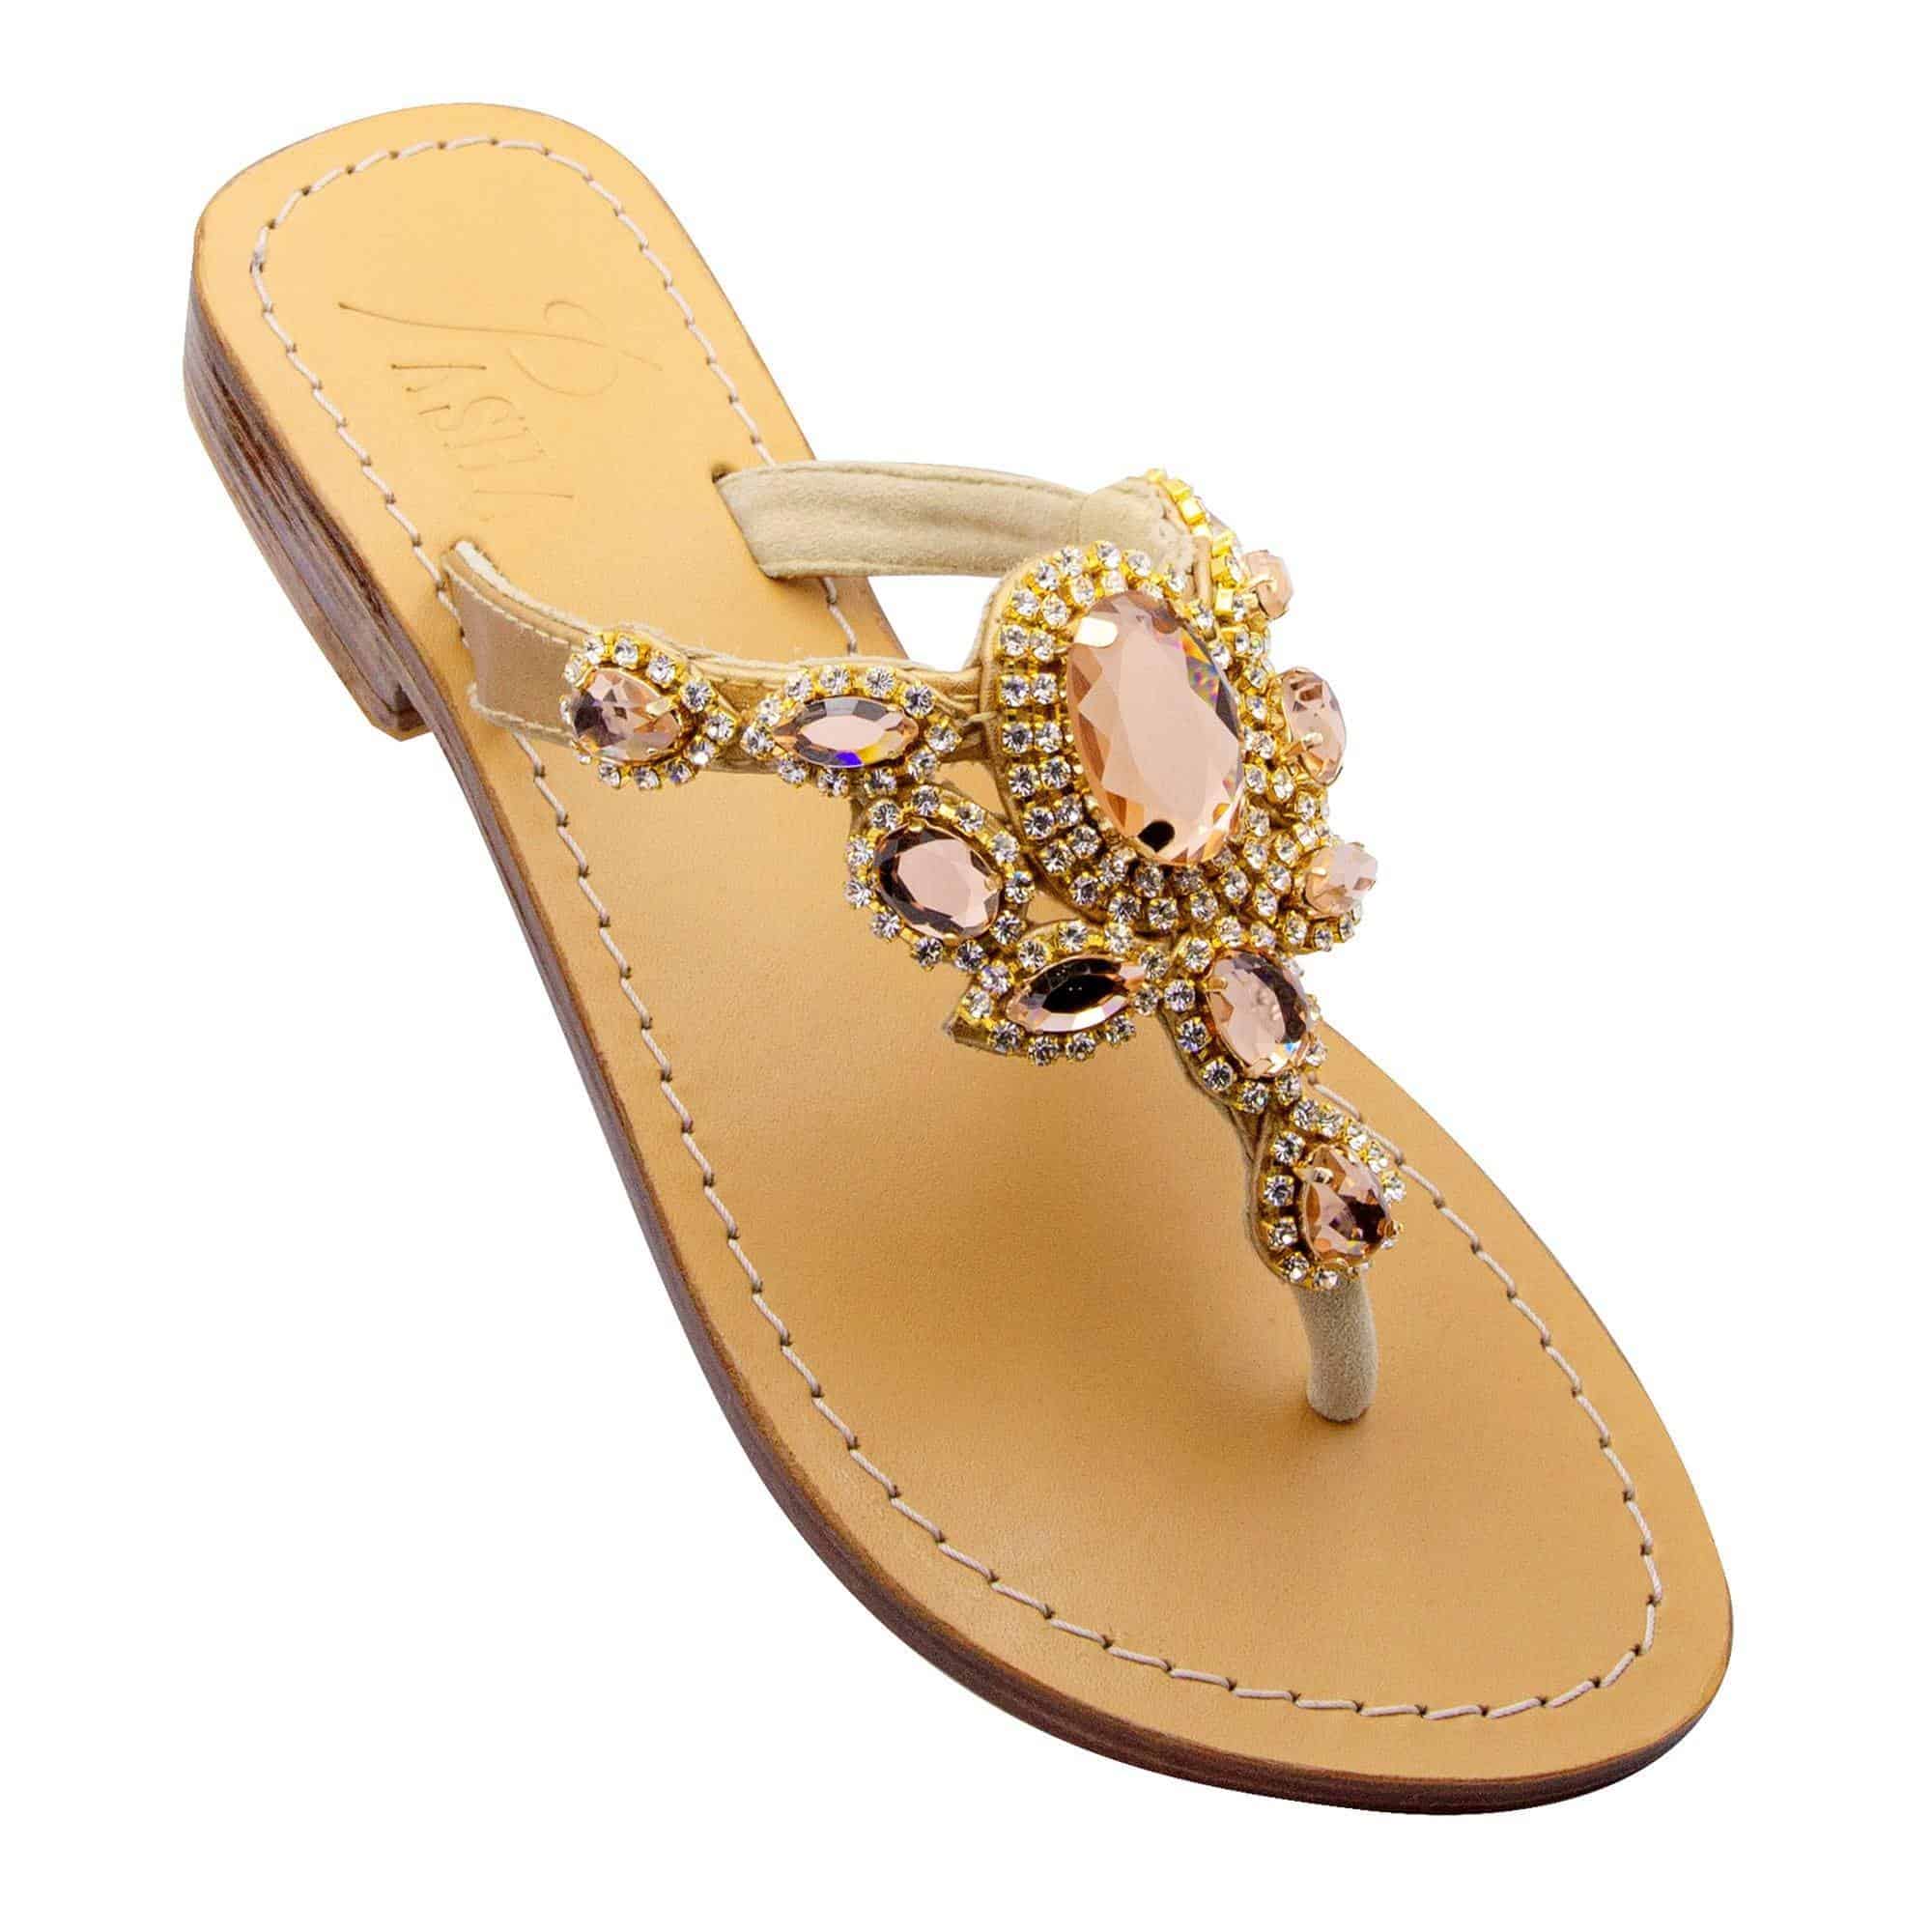 GLAROS - Pasha Sandals - Jewelry for your feet - 